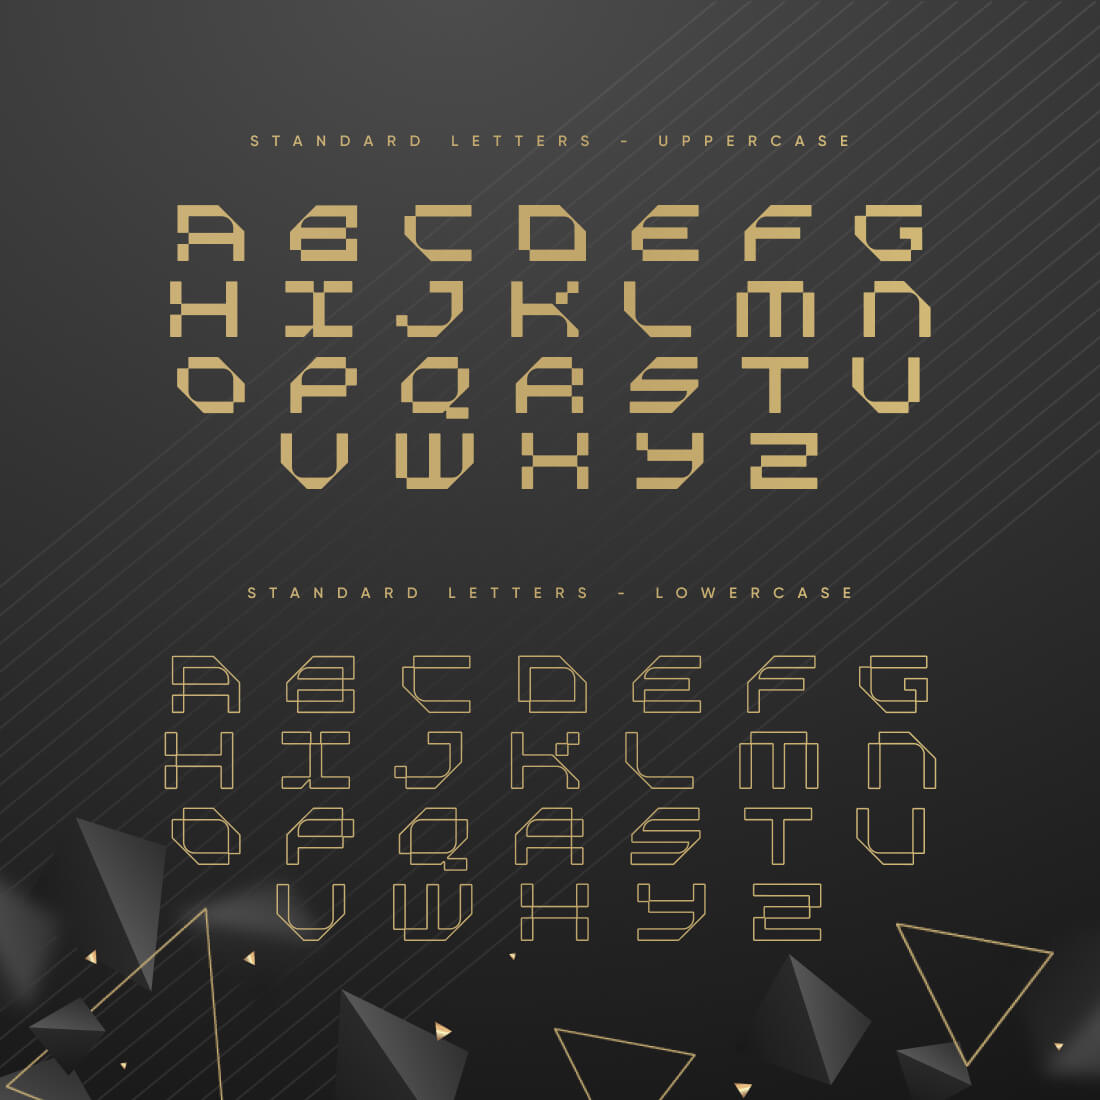 Effervescent Serif Monospaced Font cover image.